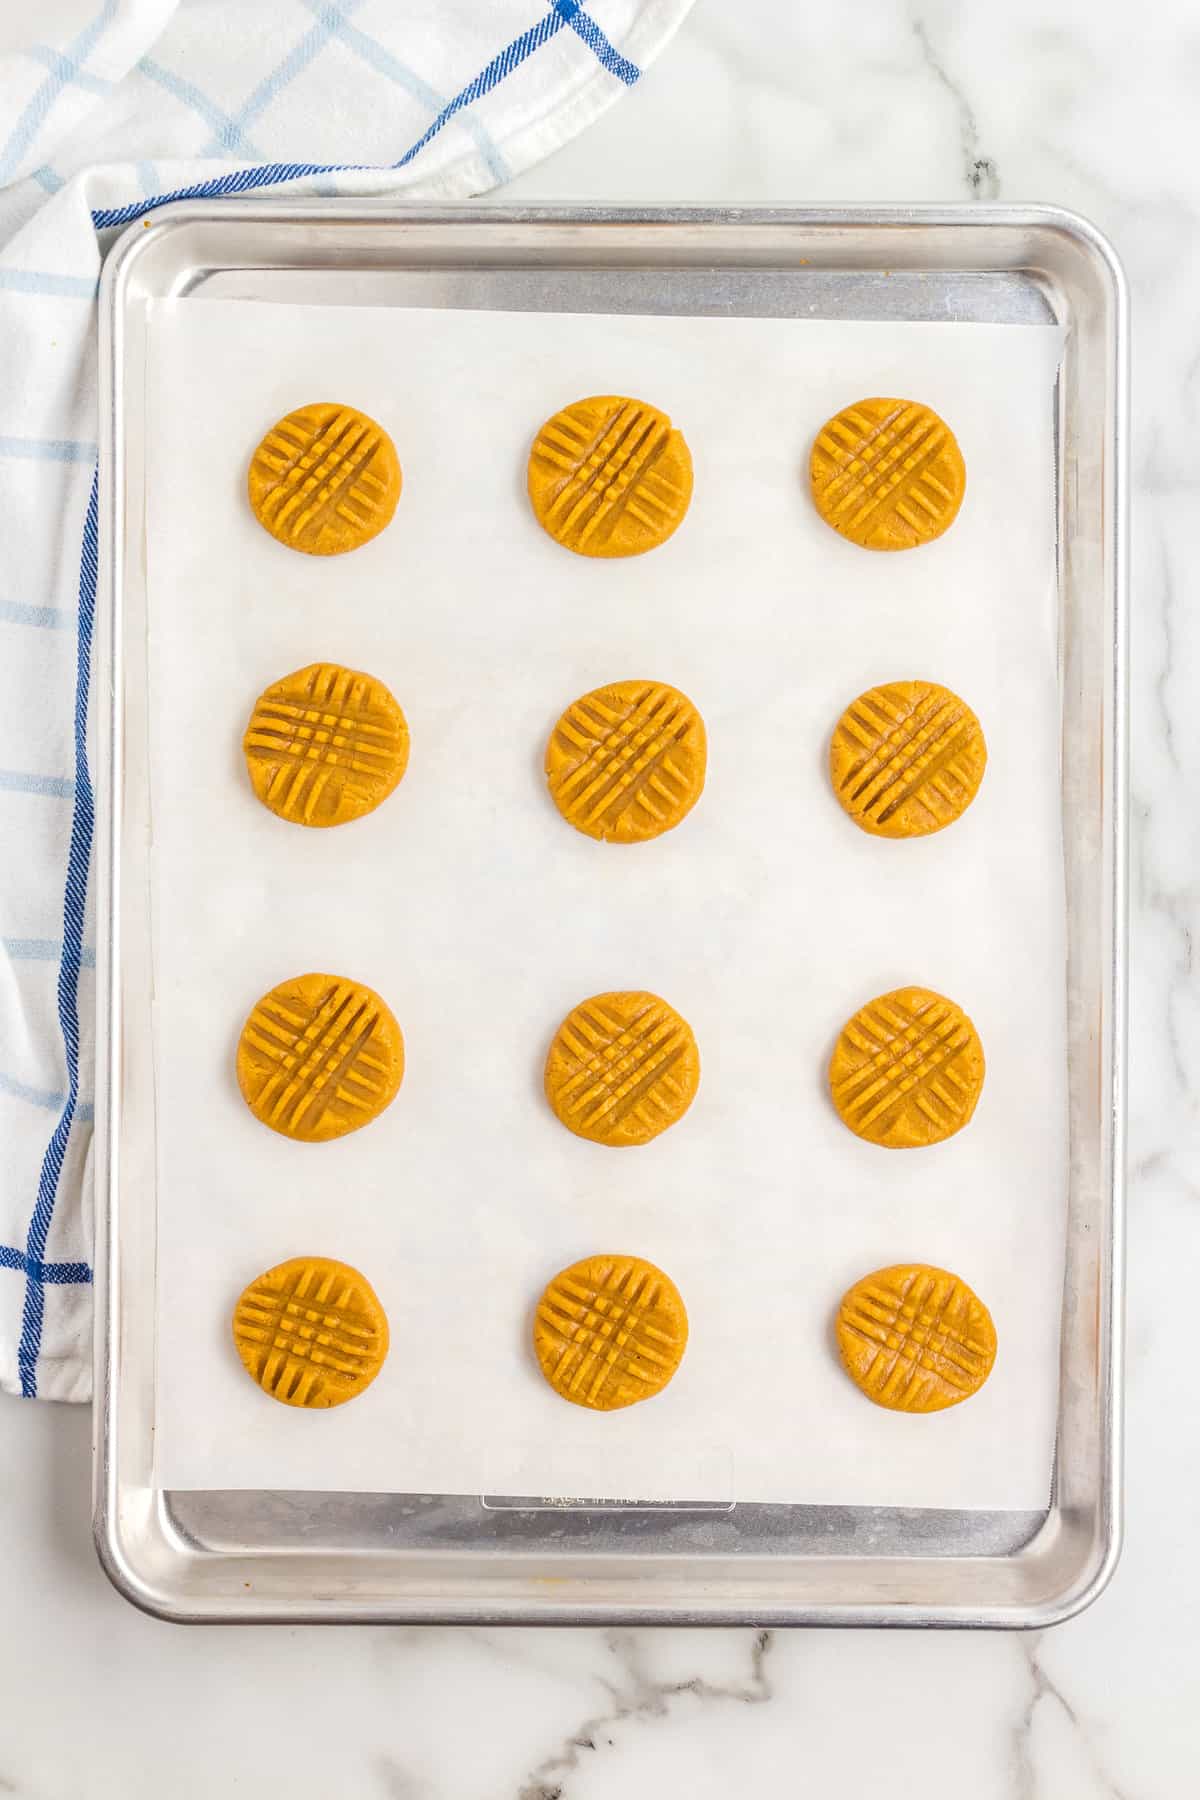 Criss crossed peanut butter cookies on sheet pan